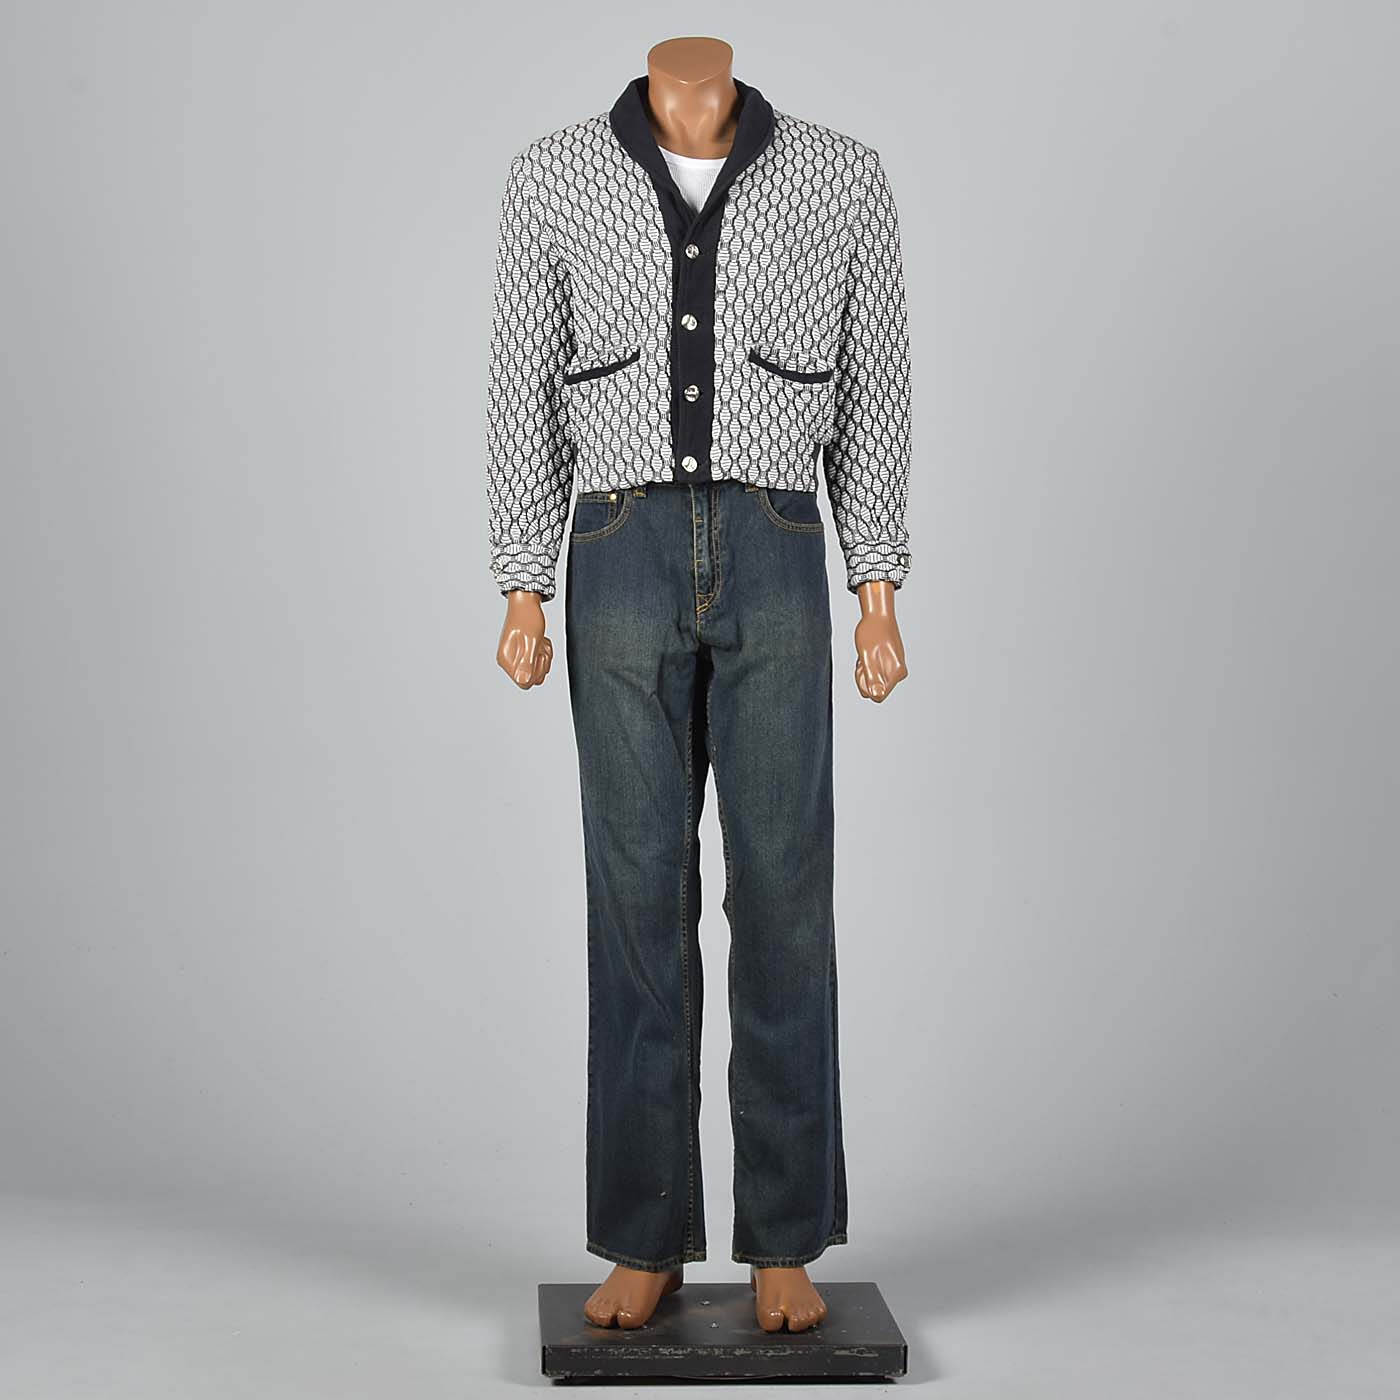 Medium 1950s Mens Cardigan Jacket